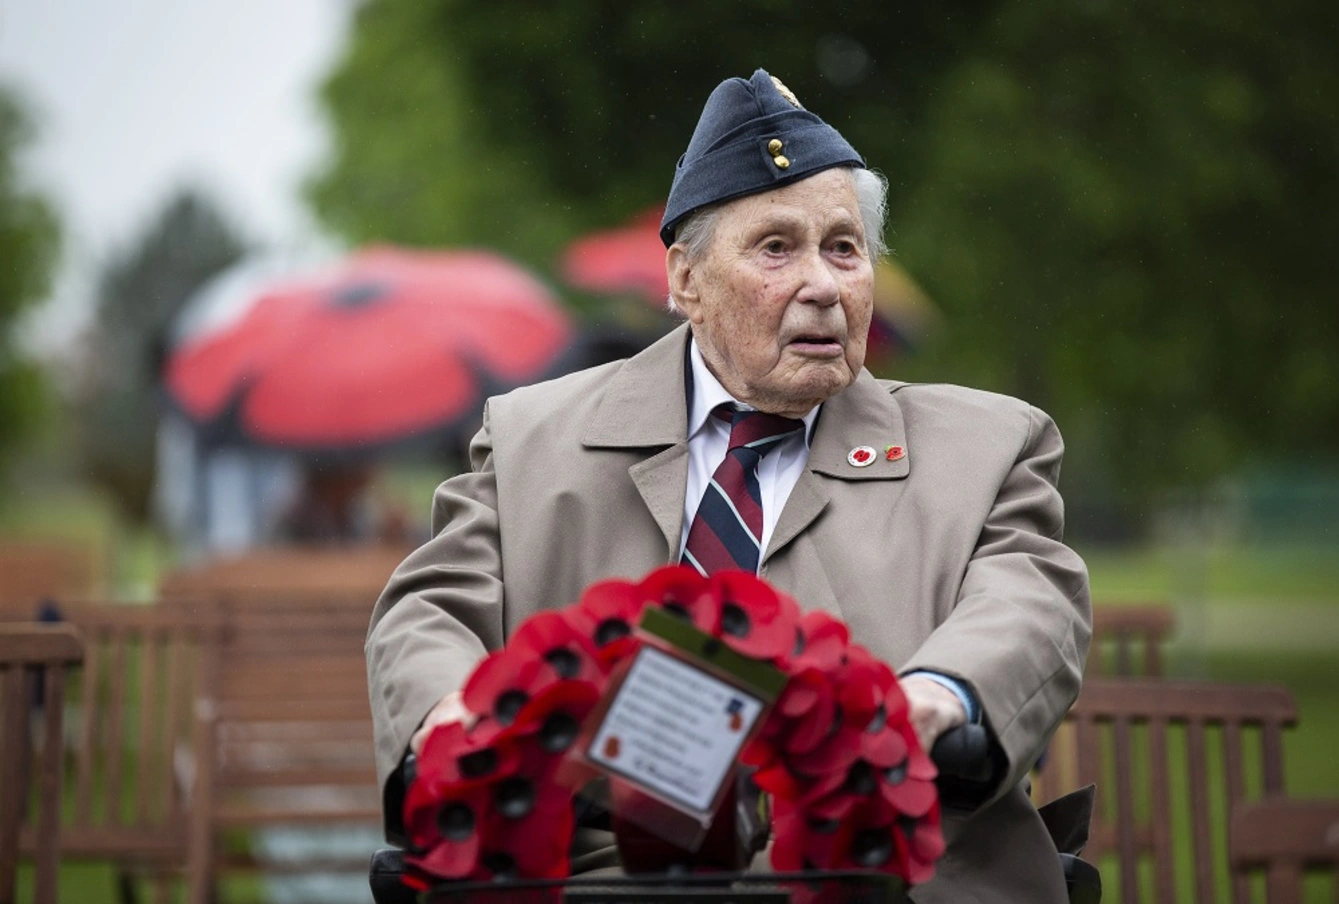 Normandy veteran carrying wreath